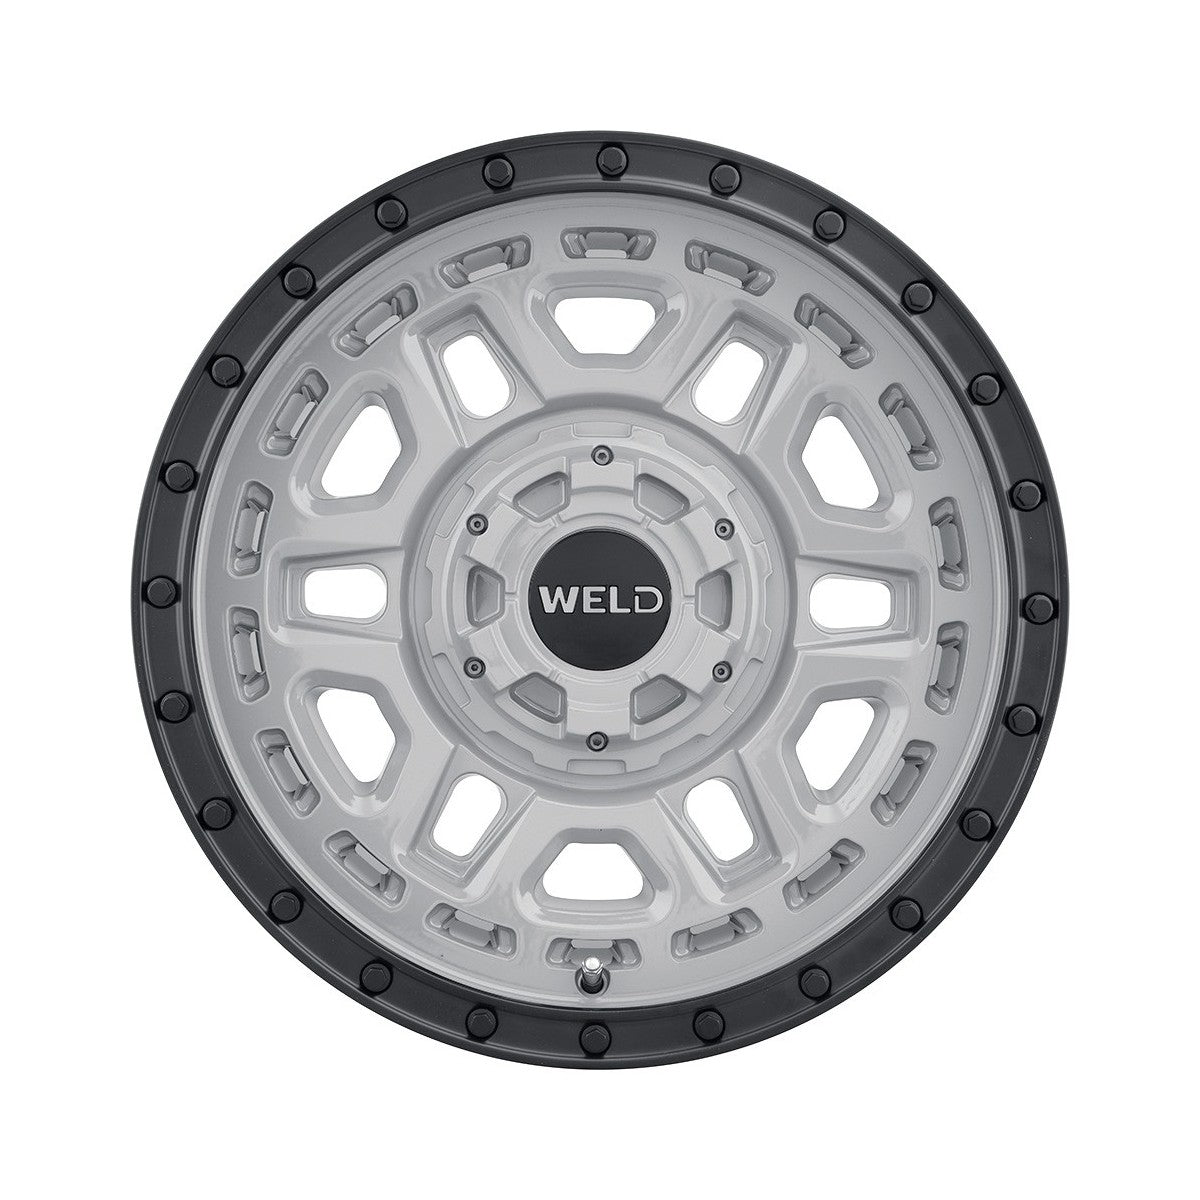 WELD WHEELS - CRUX W169 GLOSS ARMOR GRAY/SATIN BLACK